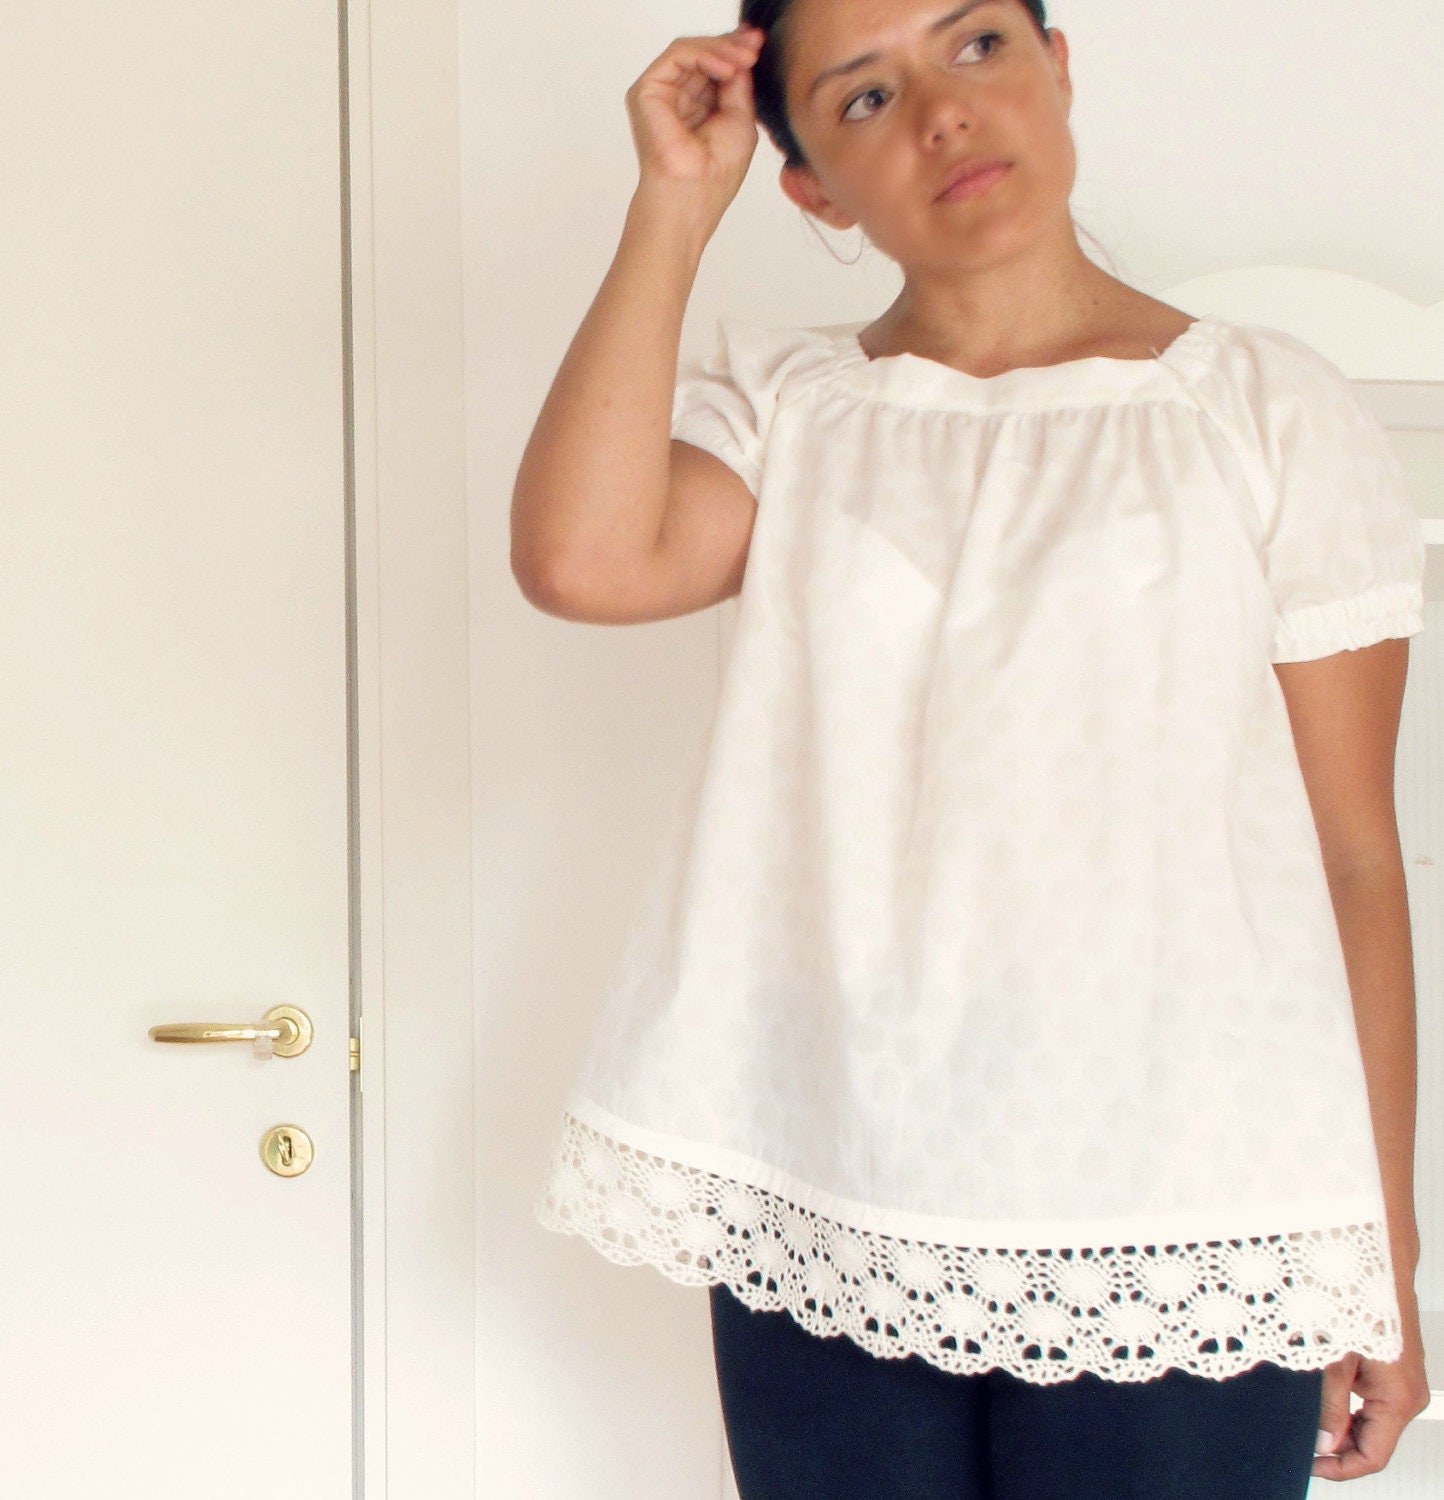 Women's blouse light cream, balloon sleeves shirt. Beige blouse, crocheted trim. Sizes US 2, 4, 6. Made to order.